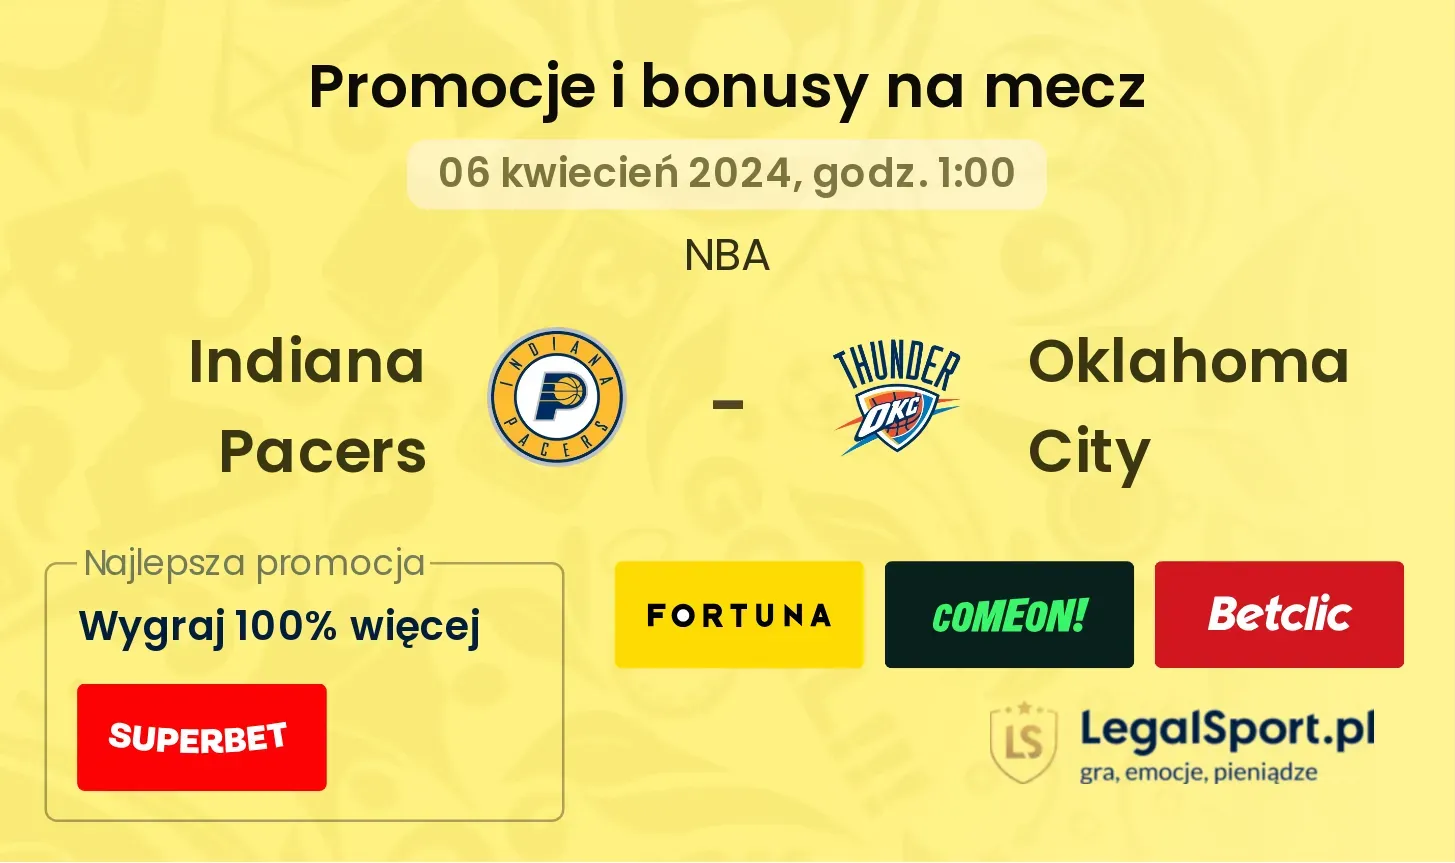 Indiana Pacers - Oklahoma City promocje bonusy na mecz